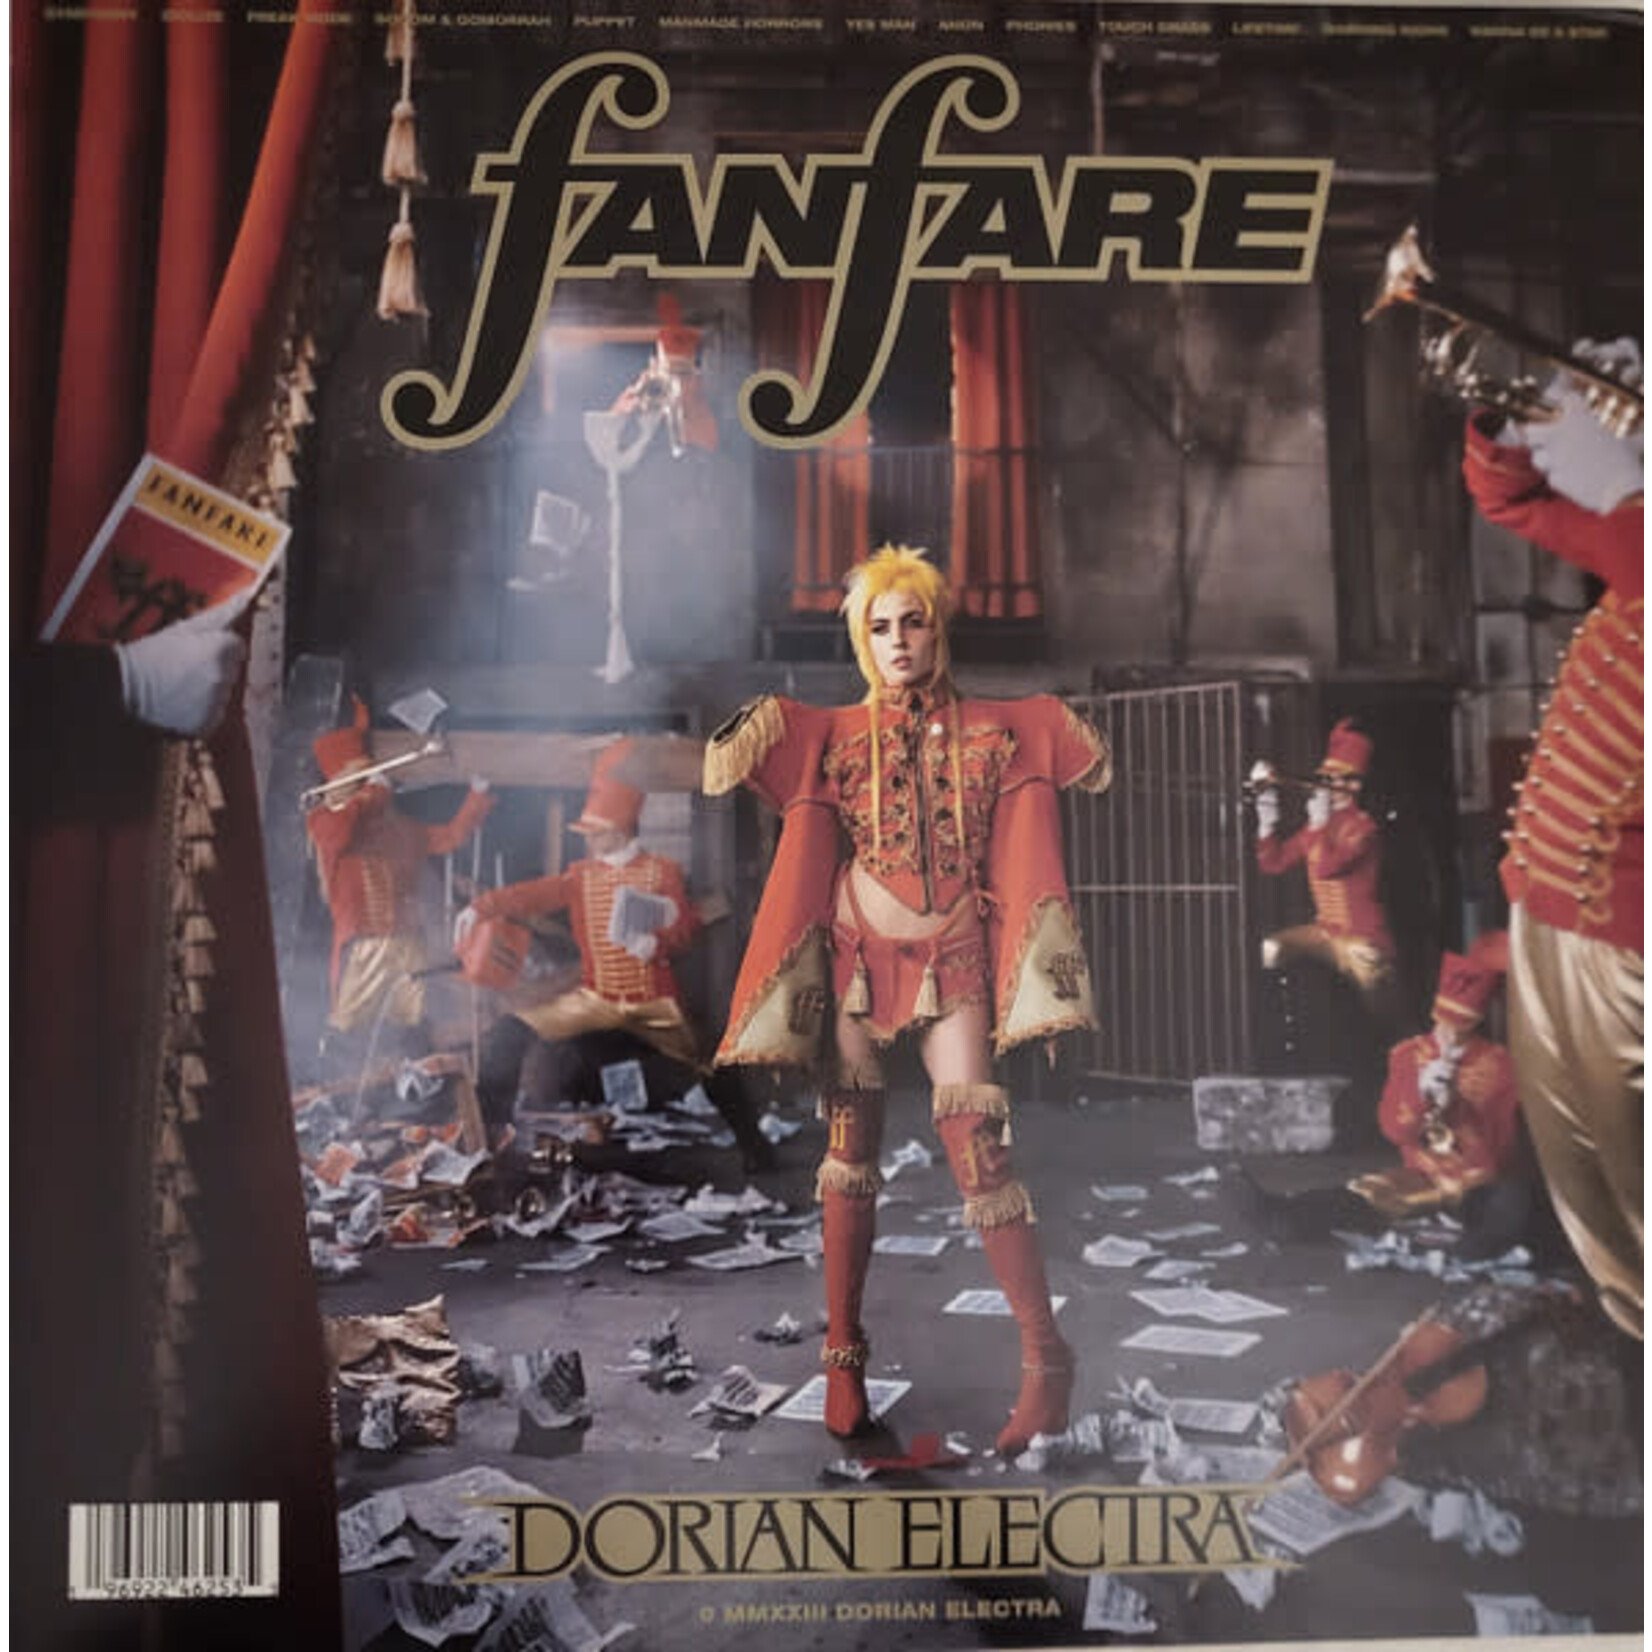 Dorian Electra - Fanfare (LP)